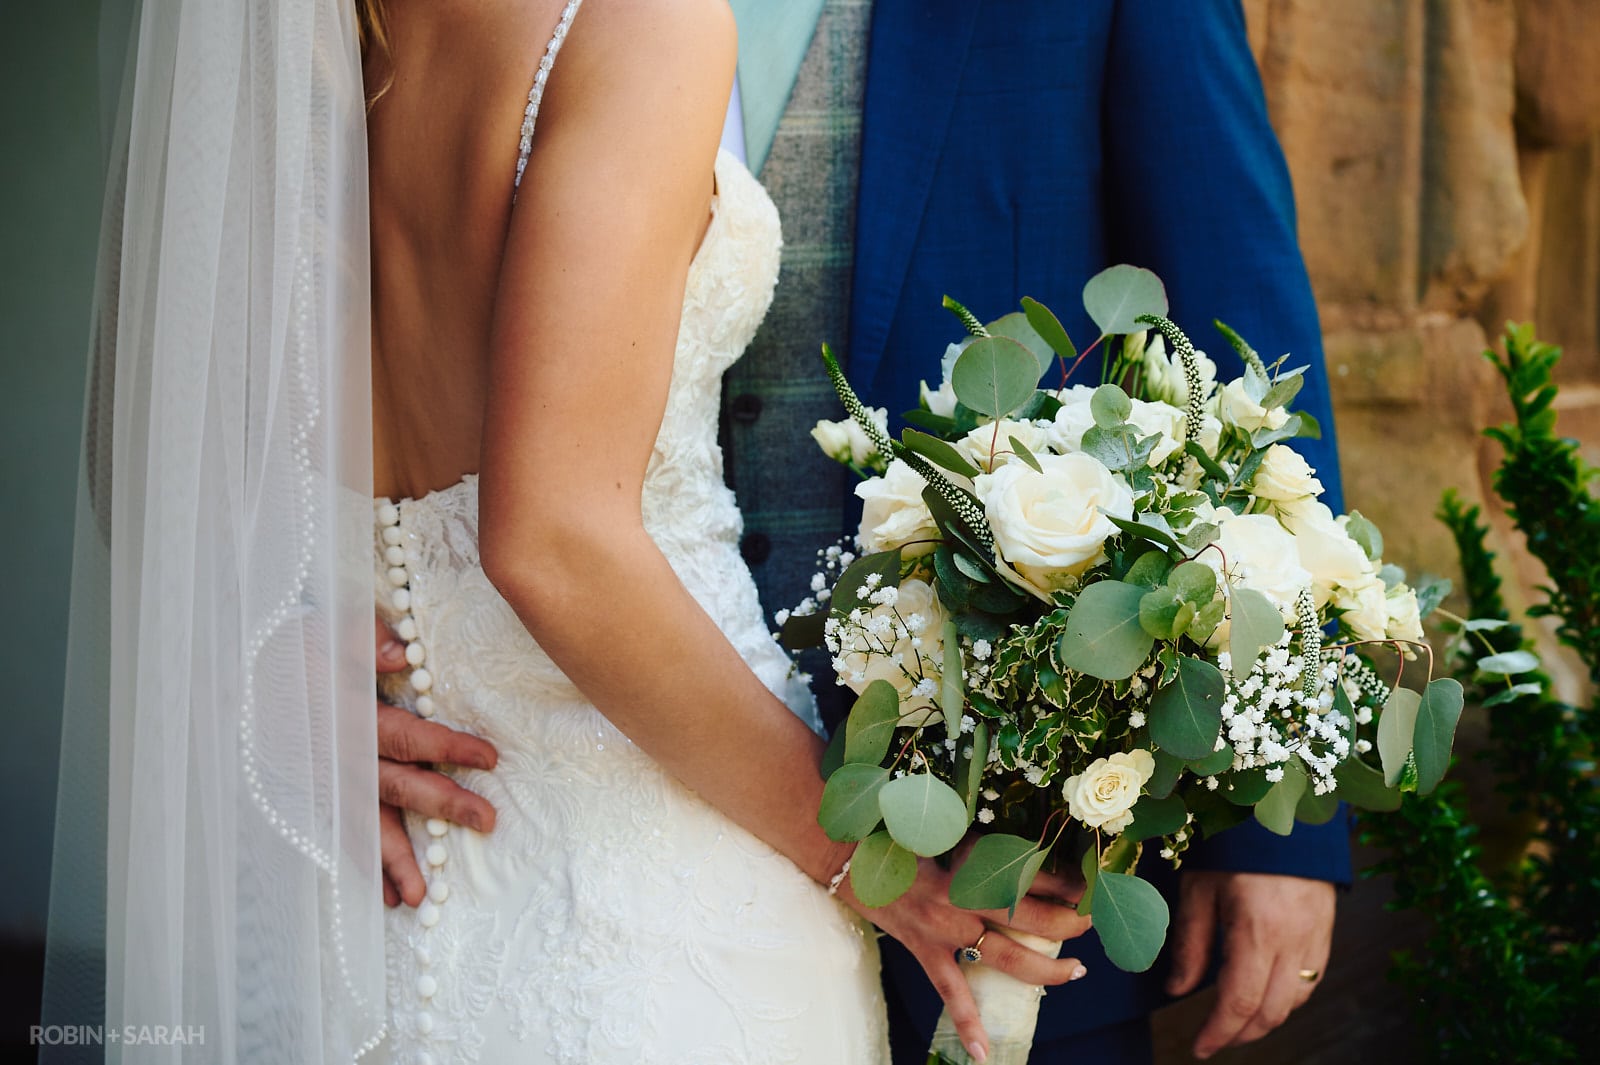 Detail of bride's wedding dress, veil and bouquet